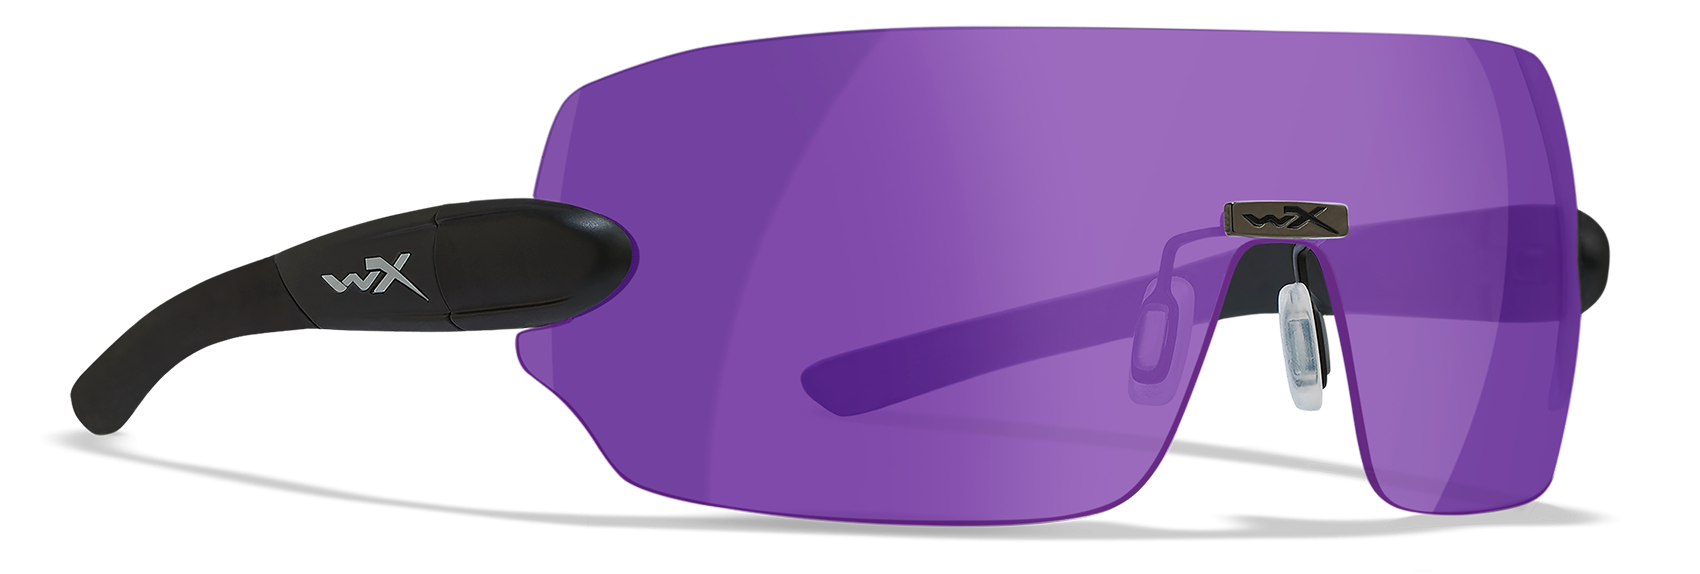 Wiley X WX Detection 3 Lens Package Purple Polycarbonate Sunglasses